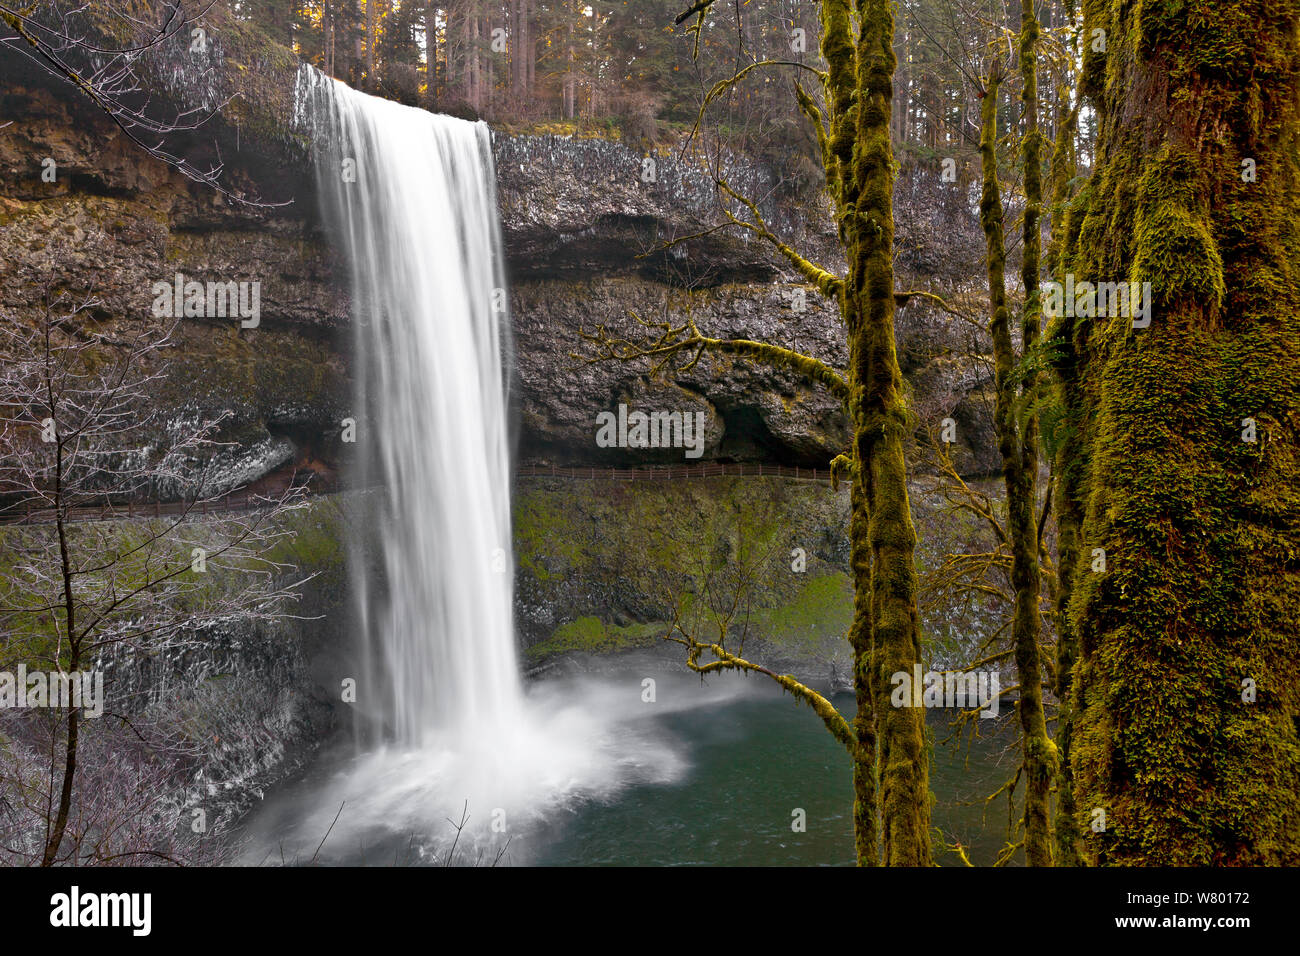 South Falls of South Fork Silver Creek, Silver Creek Falls State Park, Oregon, USA. December 2014. Stock Photo